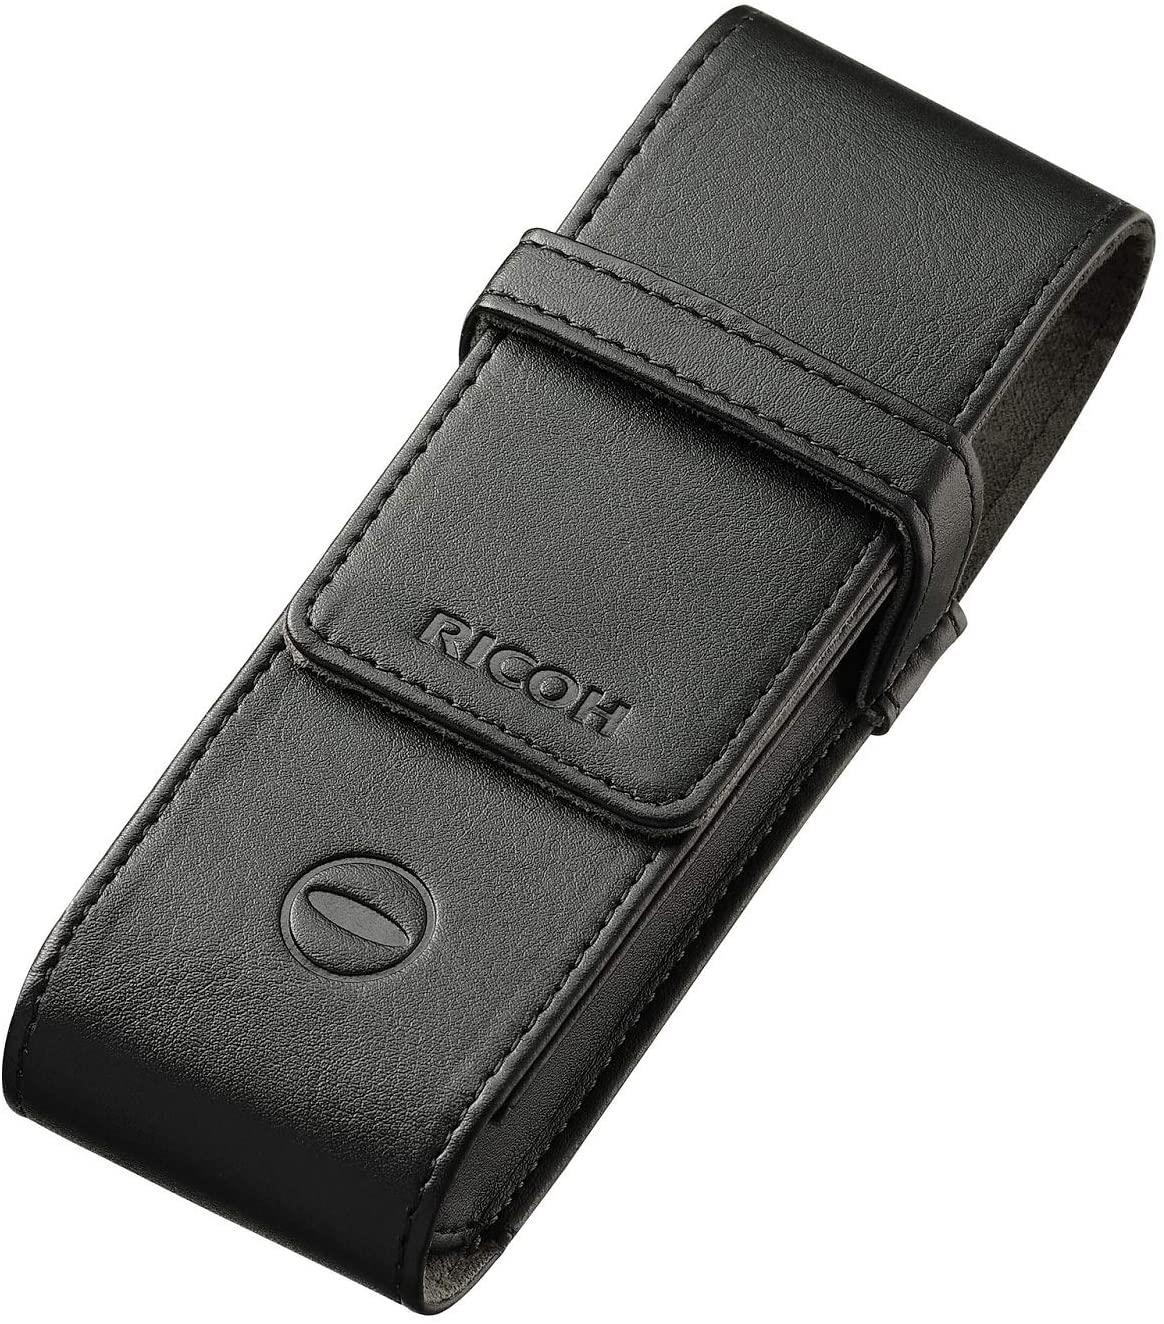 RICOH THETA TS-1 Soft Case - Black